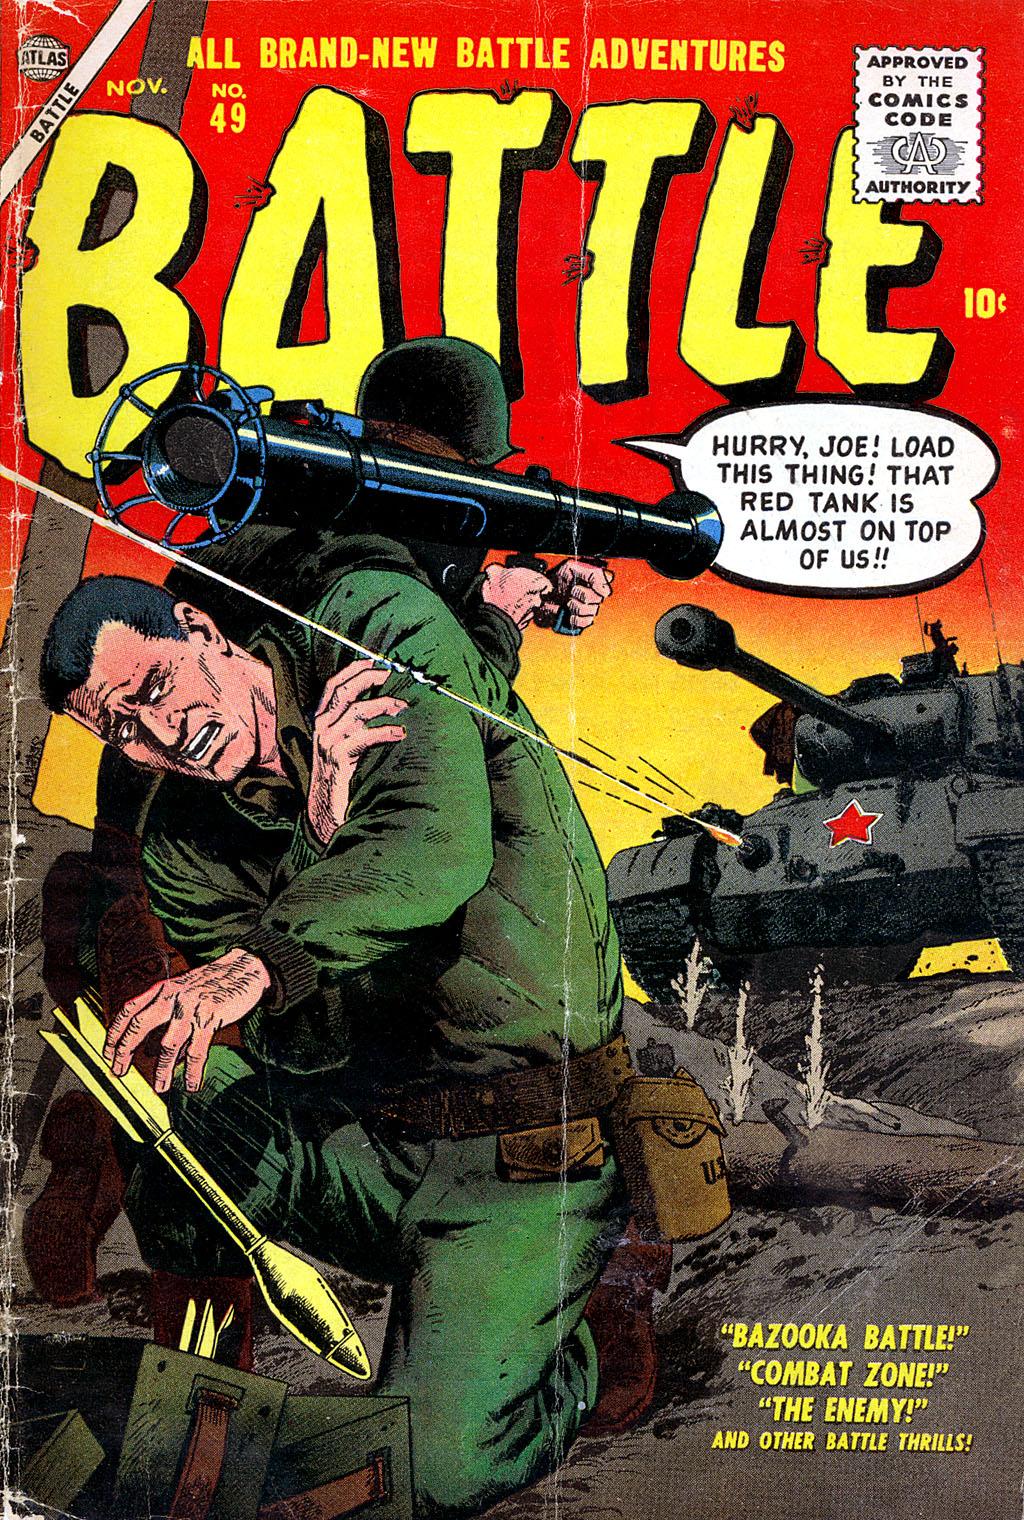 Battle Vol. 1 #49